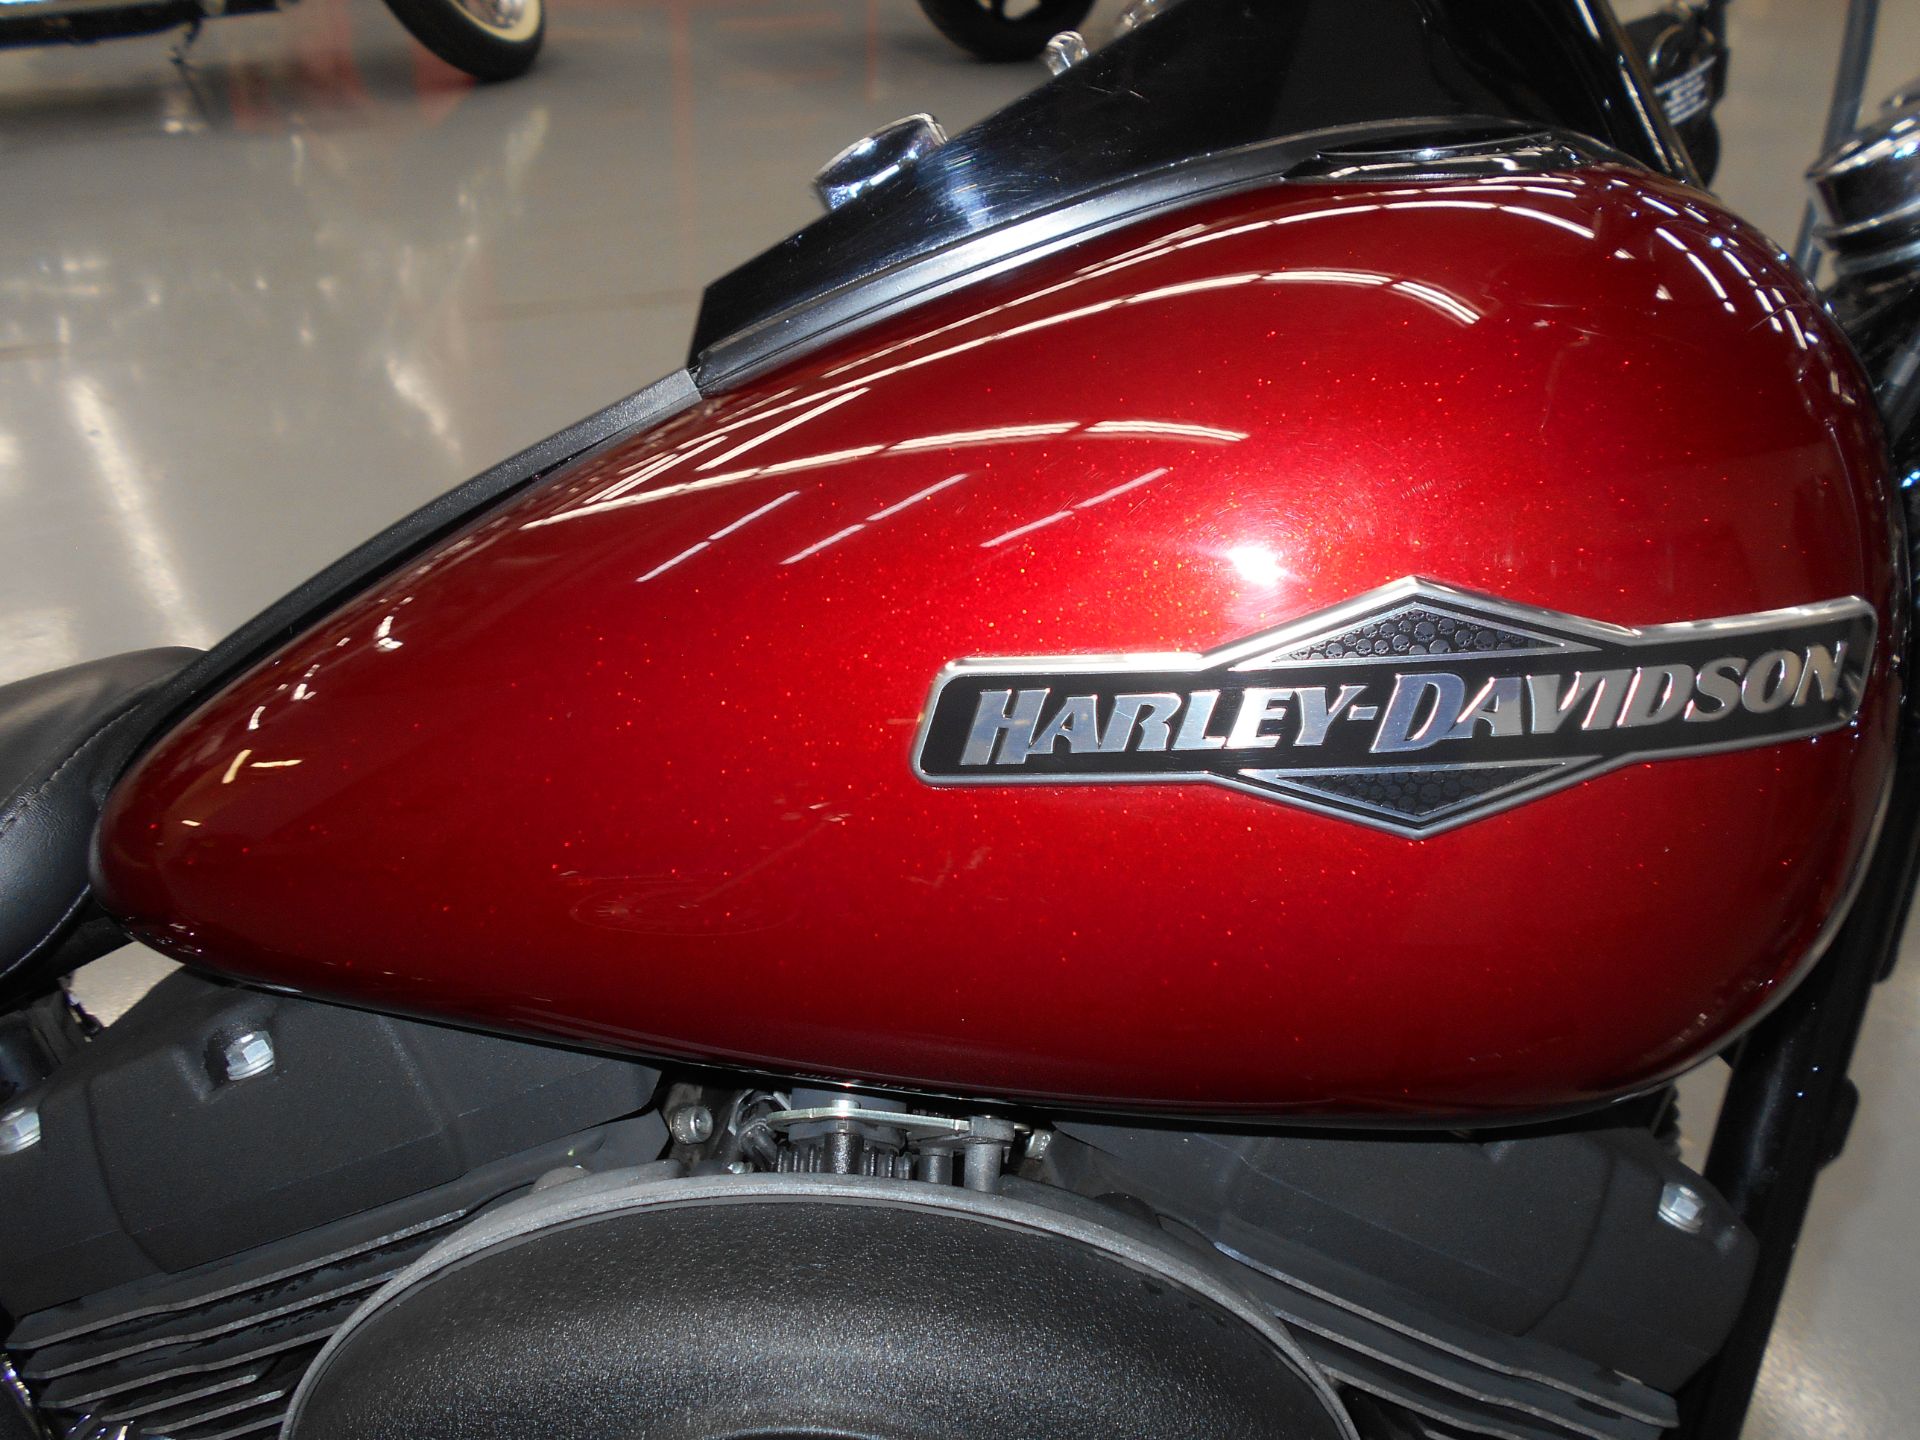 2009 Harley-Davidson Softail® Night Train® in Mauston, Wisconsin - Photo 2